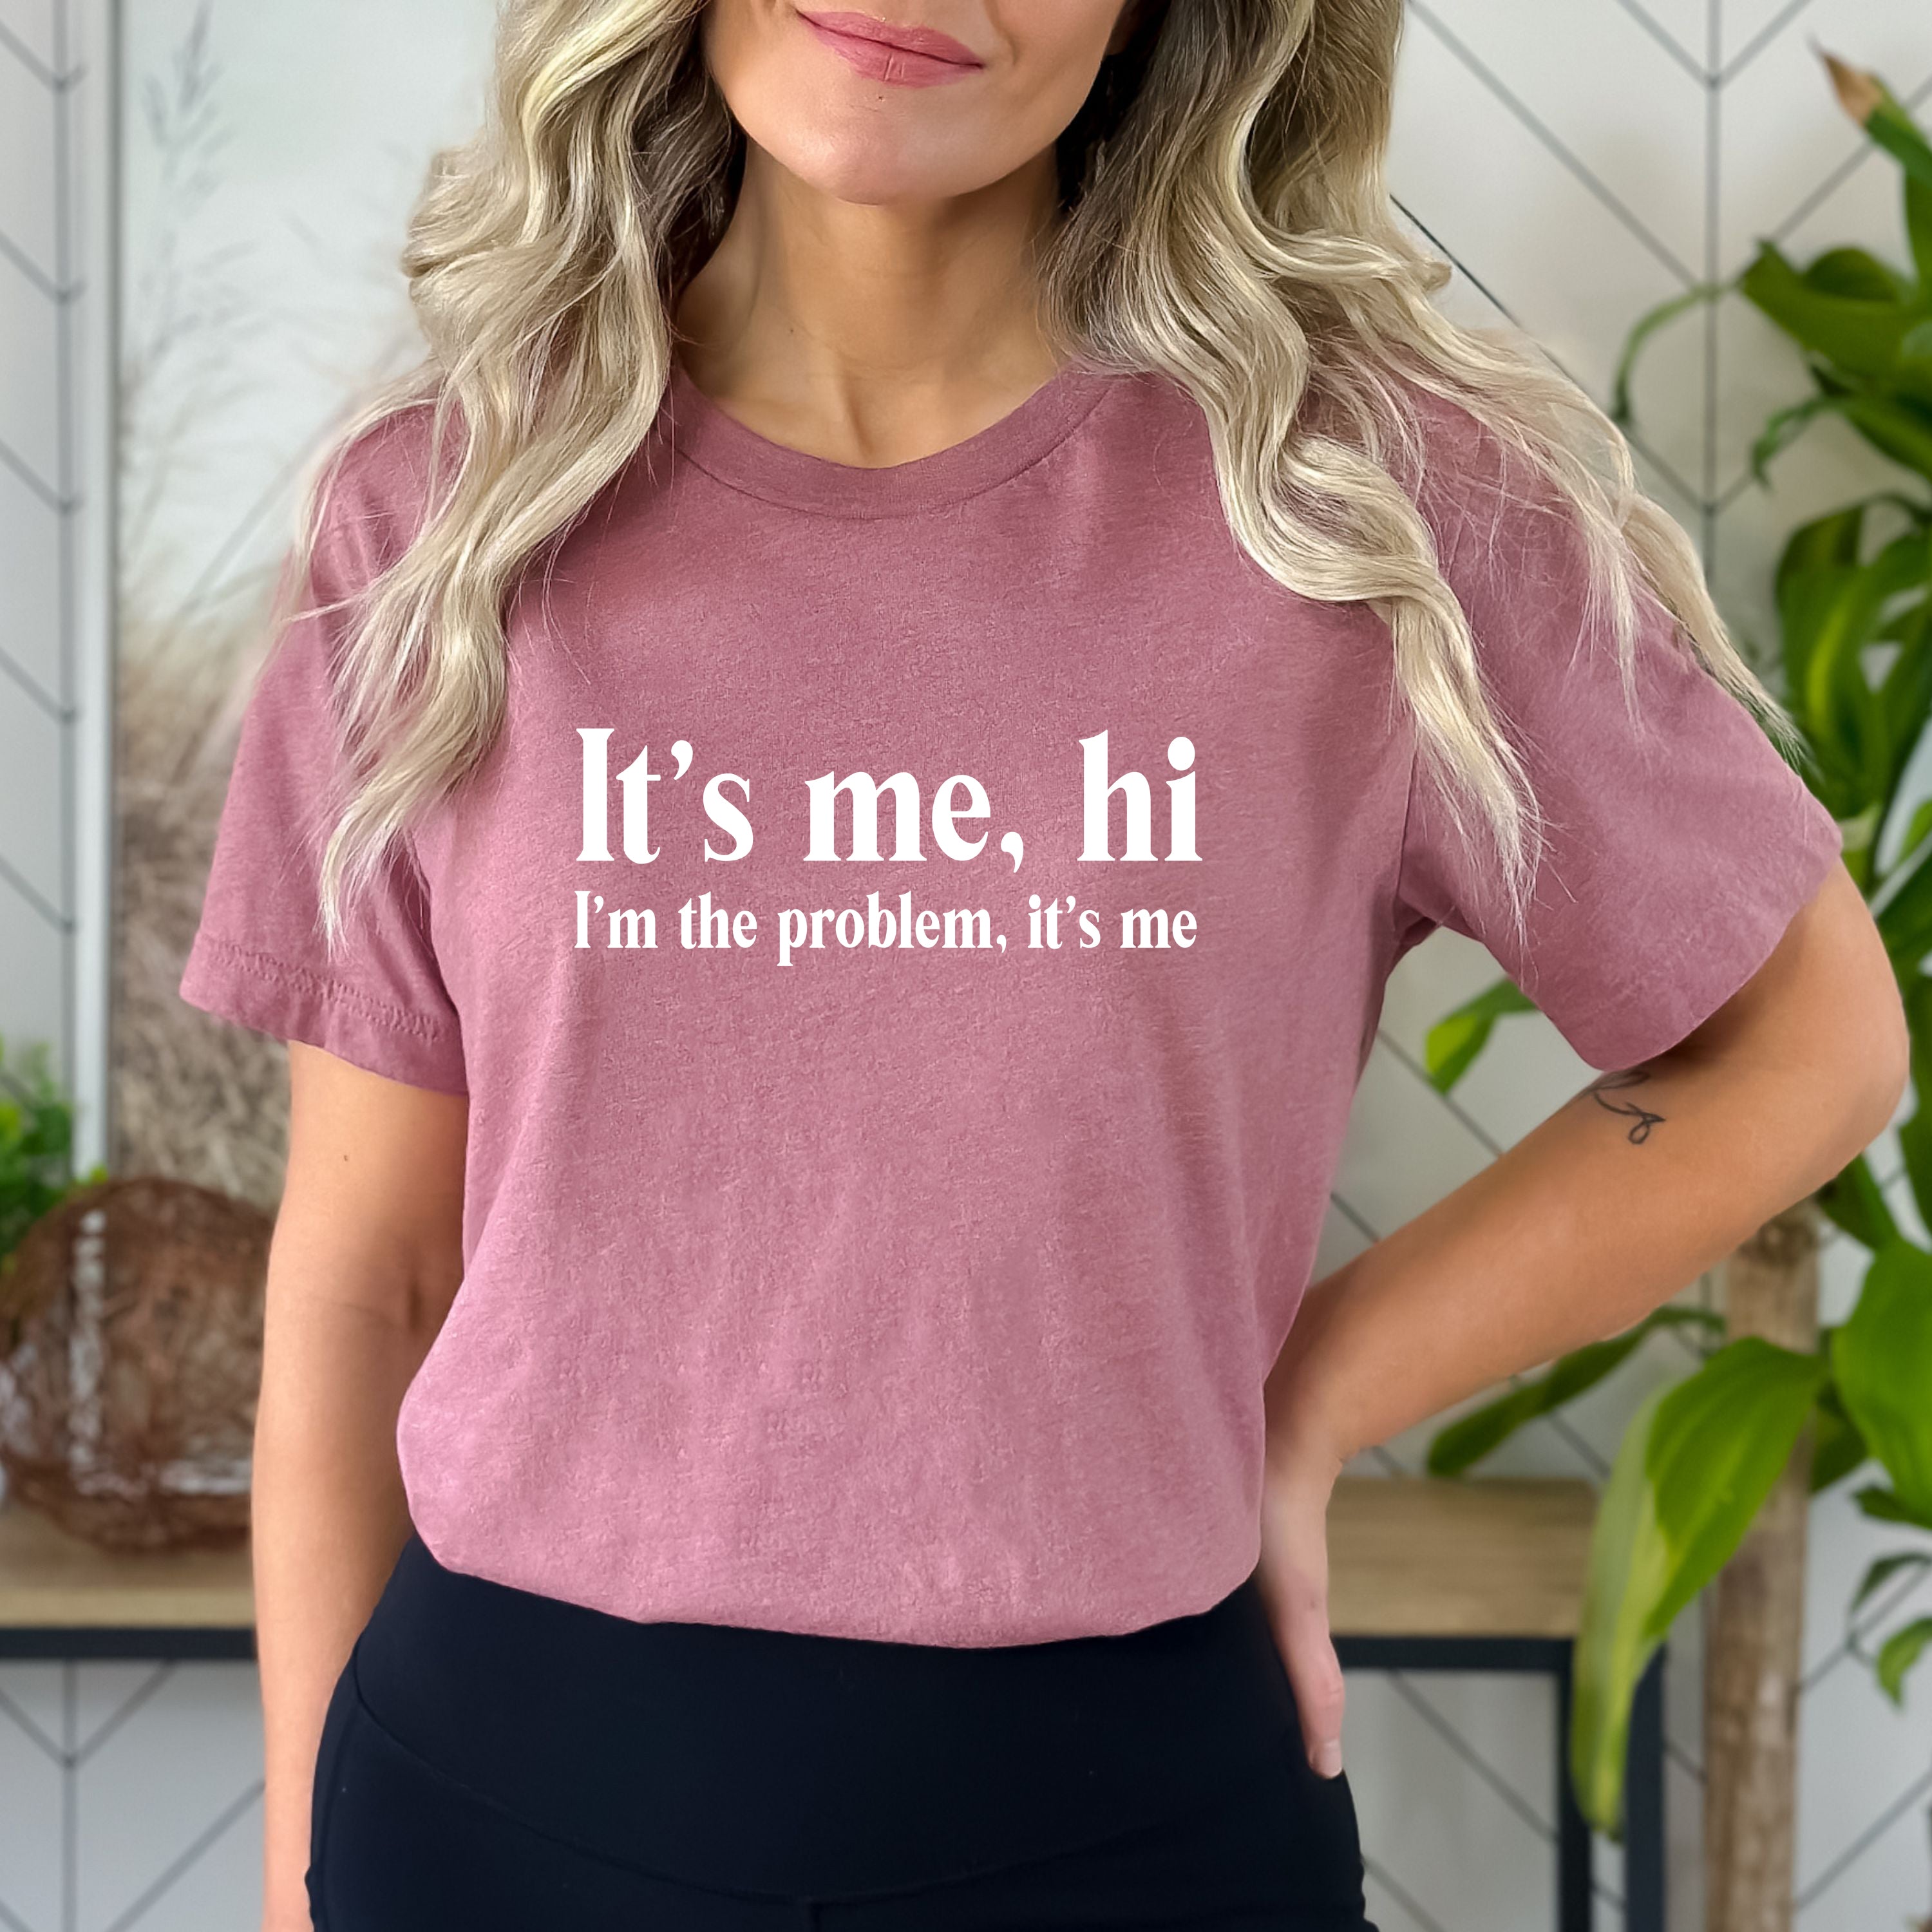 "I’m the problem, it’s me"